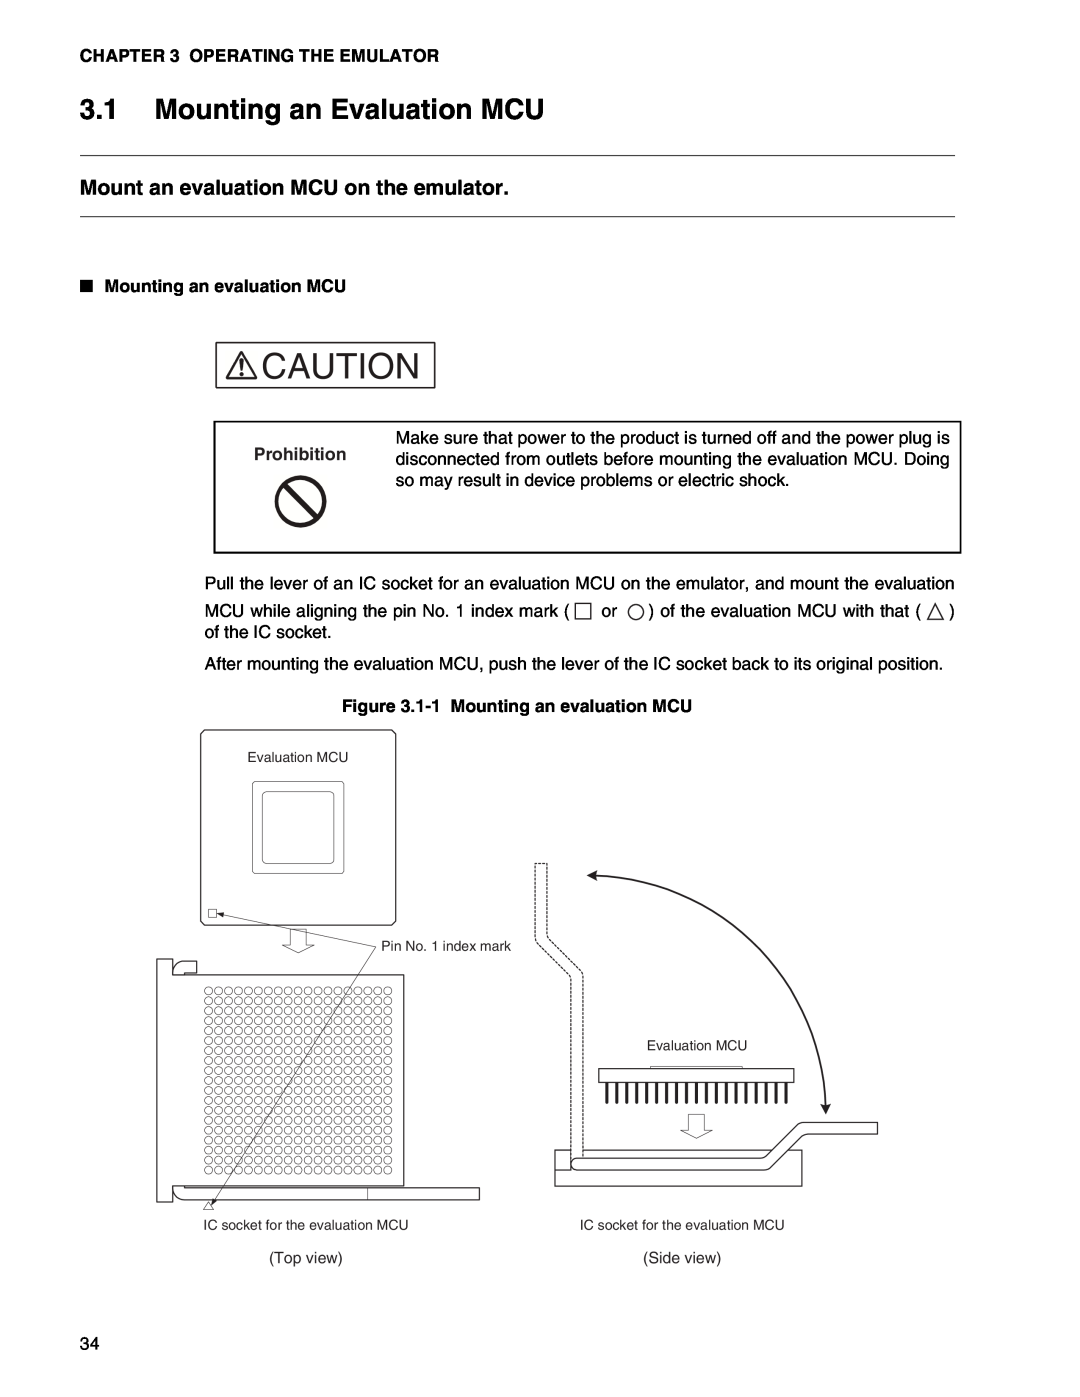 Fujitsu MB2147-01 manual Mounting an Evaluation MCU, Mount an evaluation MCU on the emulator, Operating The Emulator 